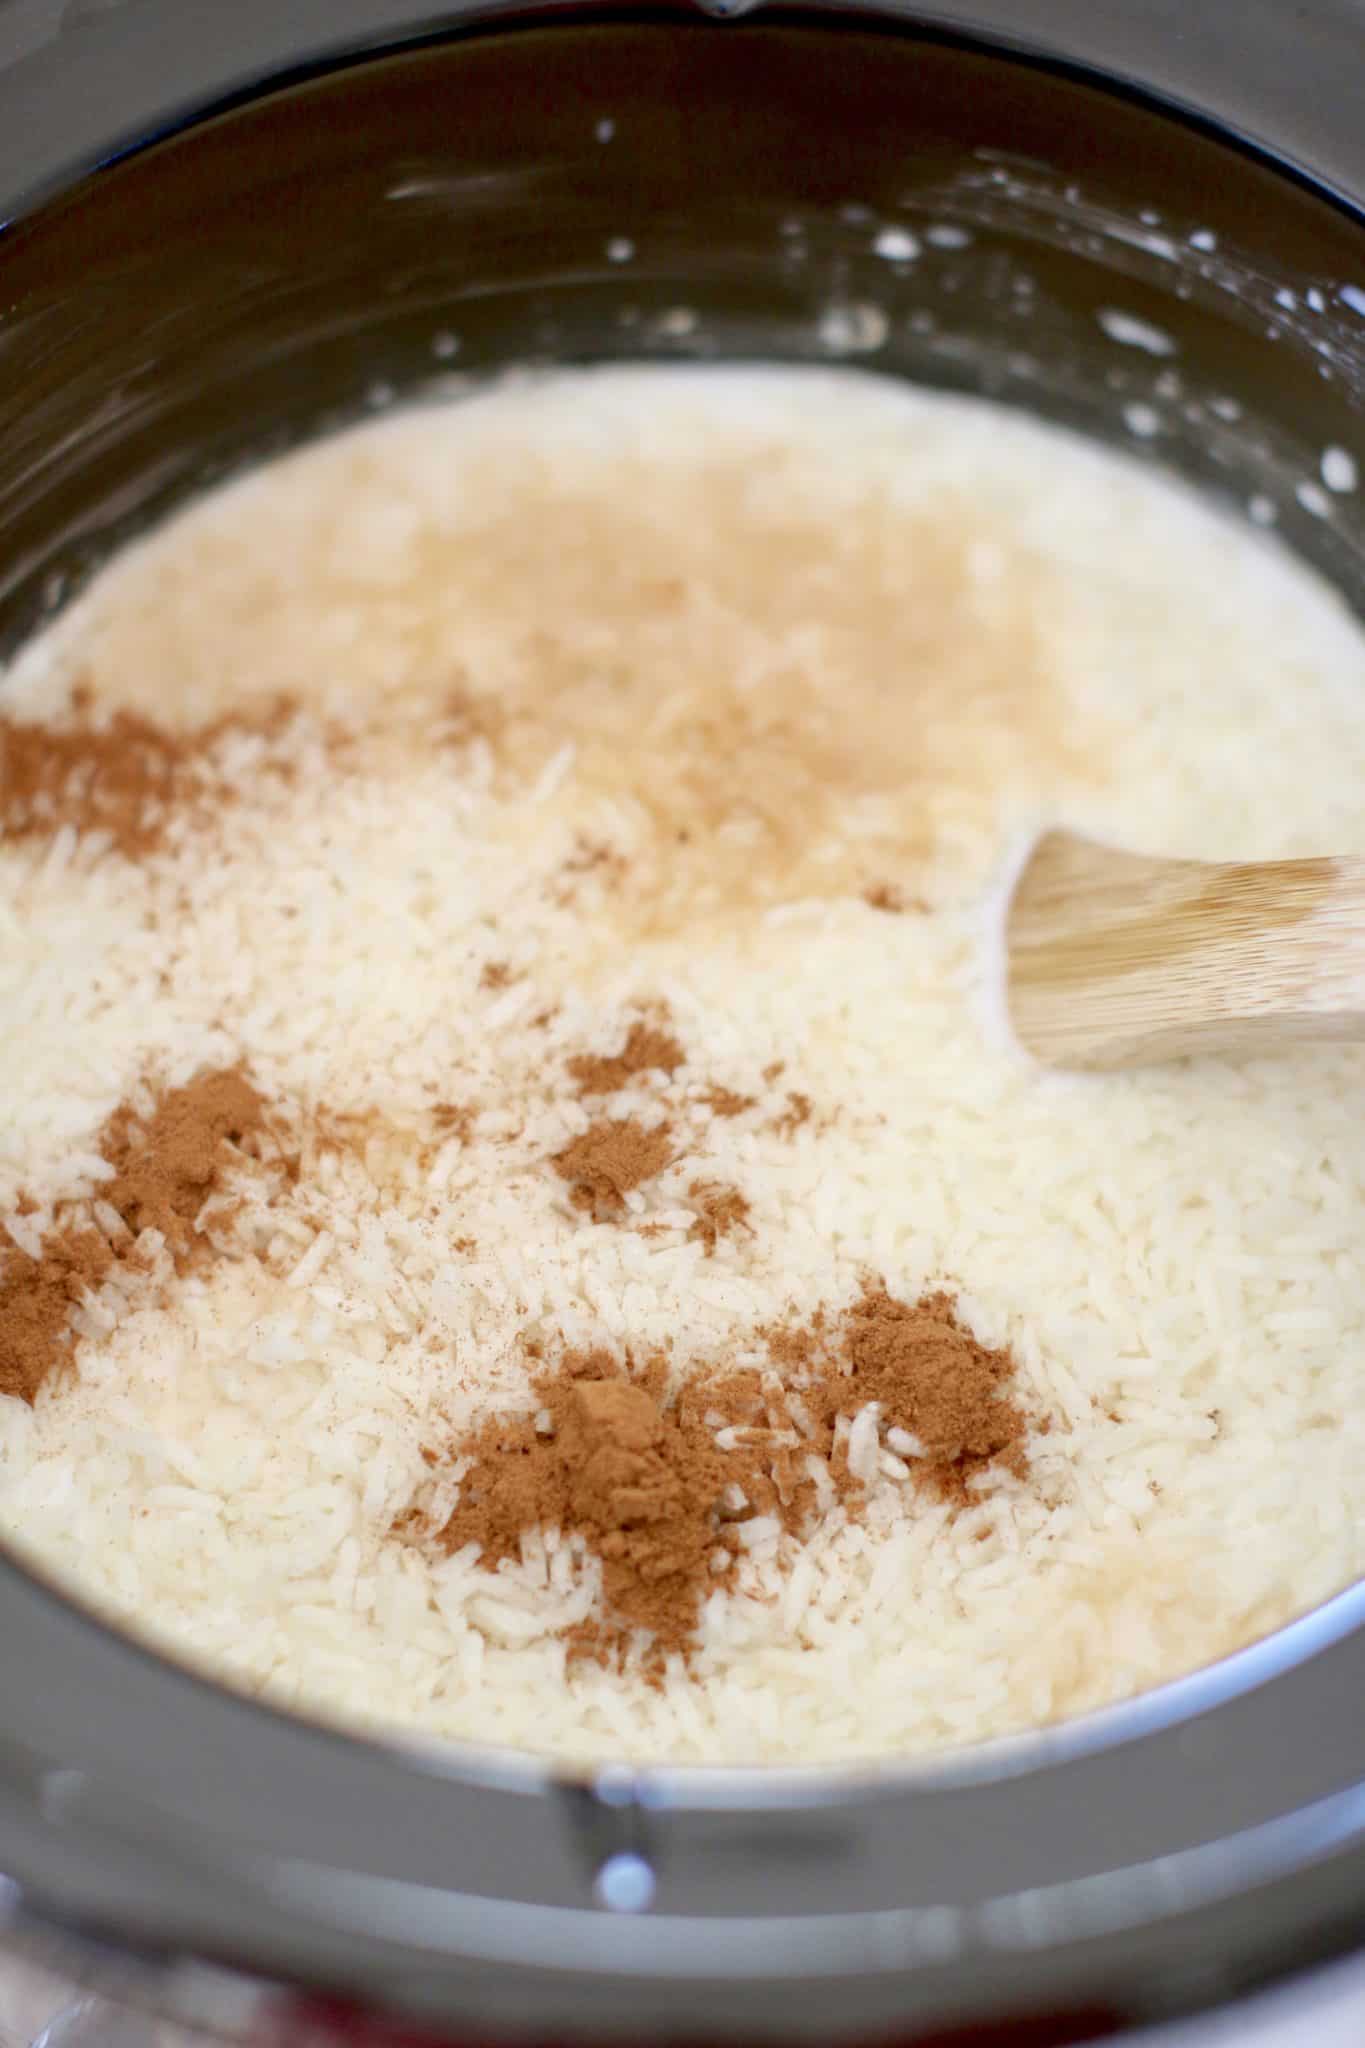 seasoning rice pudding mixture with ground cinnamon and vanilla extract.